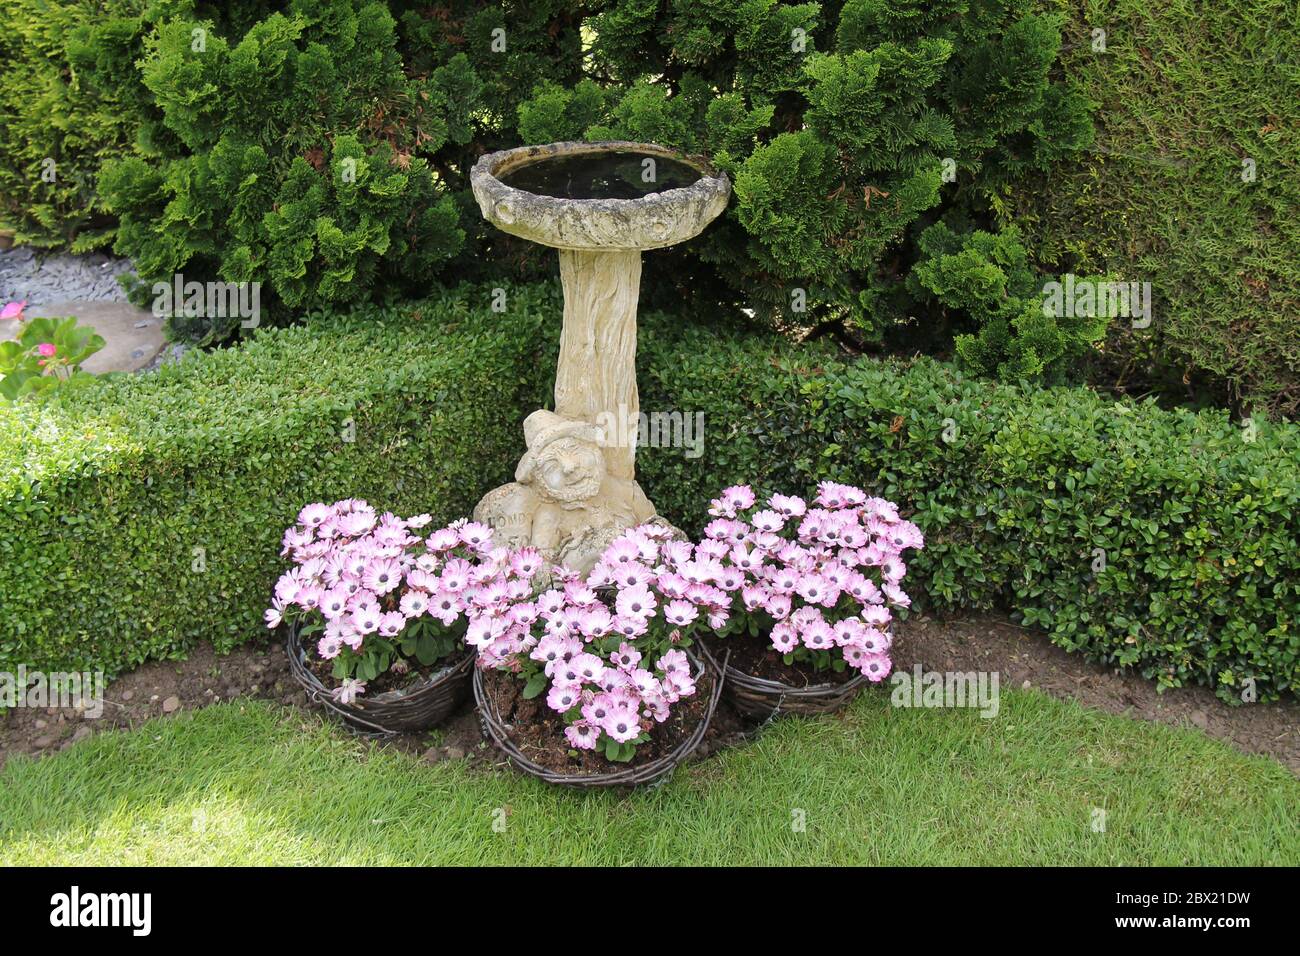 A Stone Bird Bath in a Beautiful Garden Setting. Stock Photo